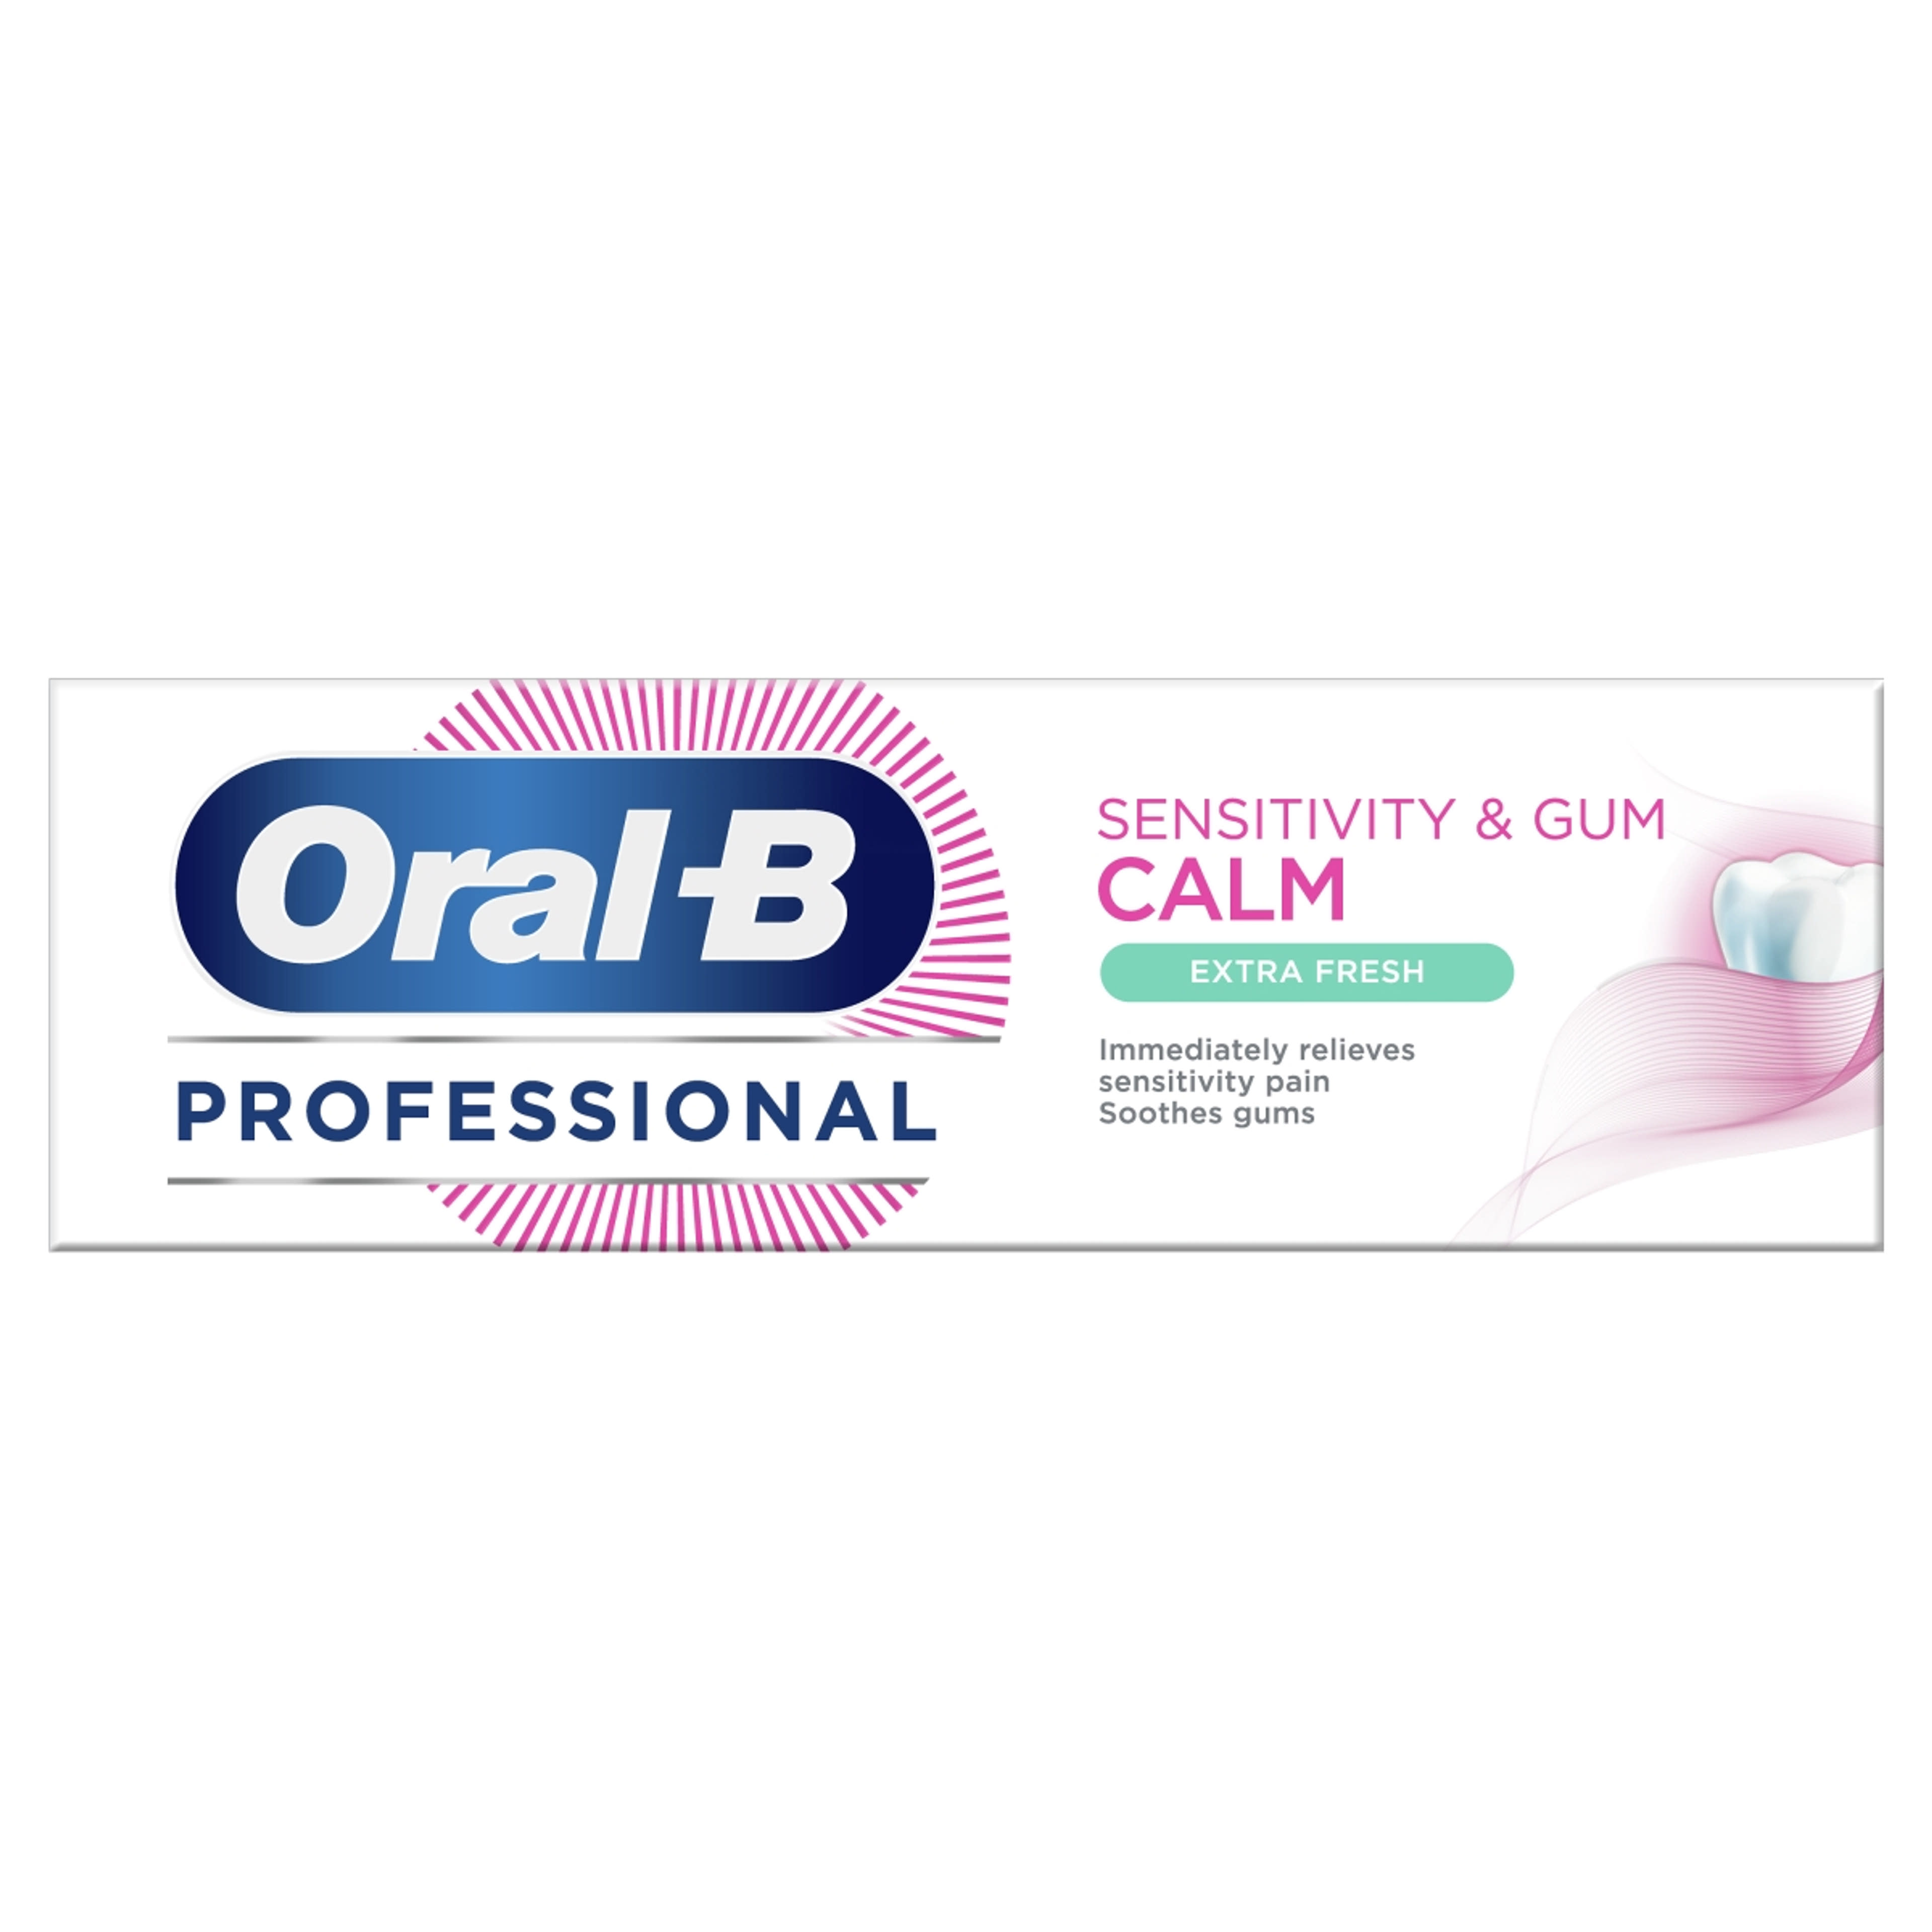 Oral-B Professional Sensitivity&Gum Calm Extra Fresh fogkrém - 75 ml-1